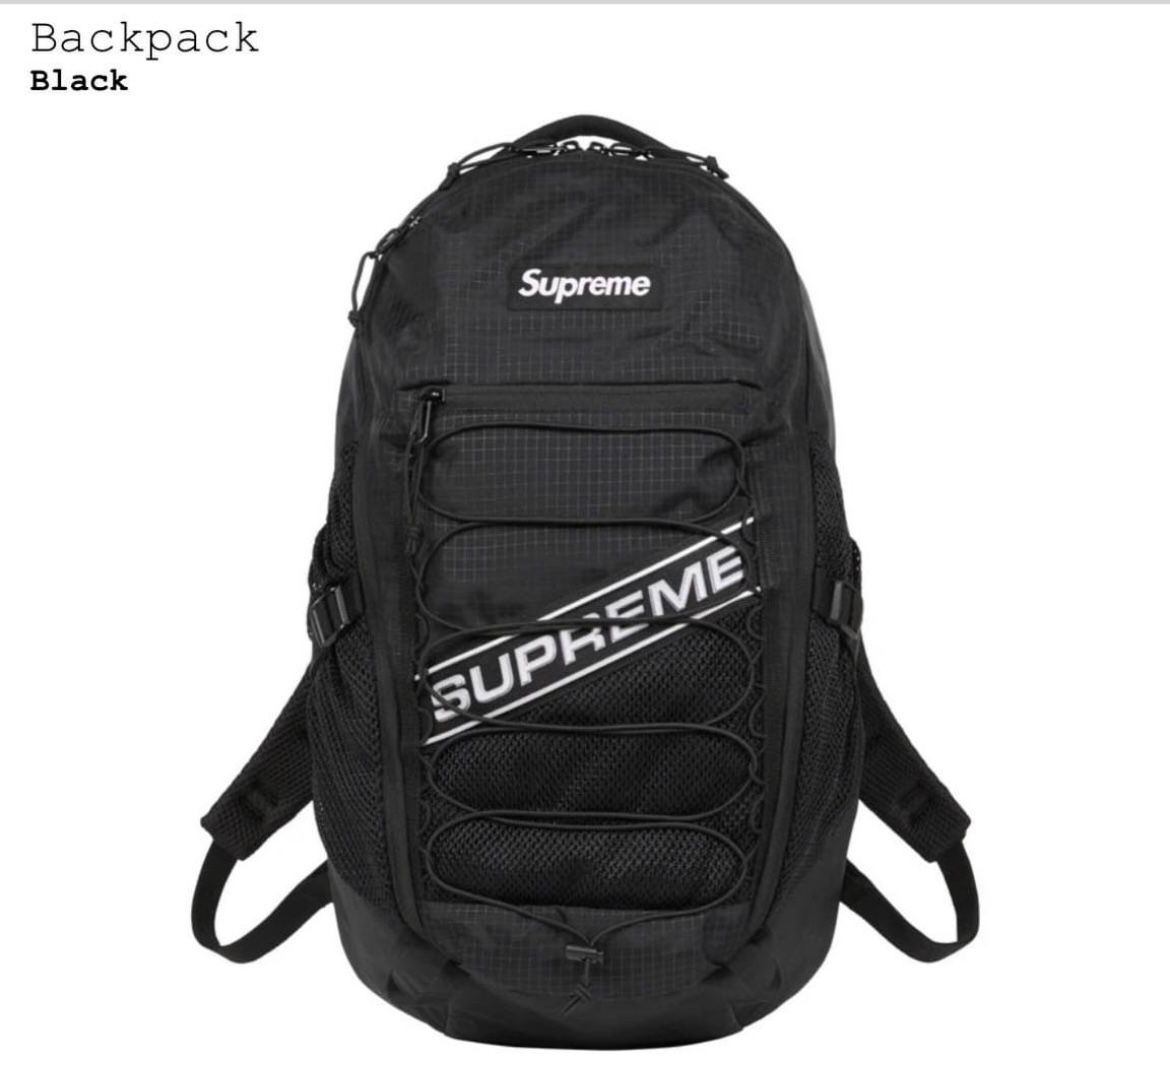 Supreme Fw20 Backpack for Sale in Waipahu, HI - OfferUp